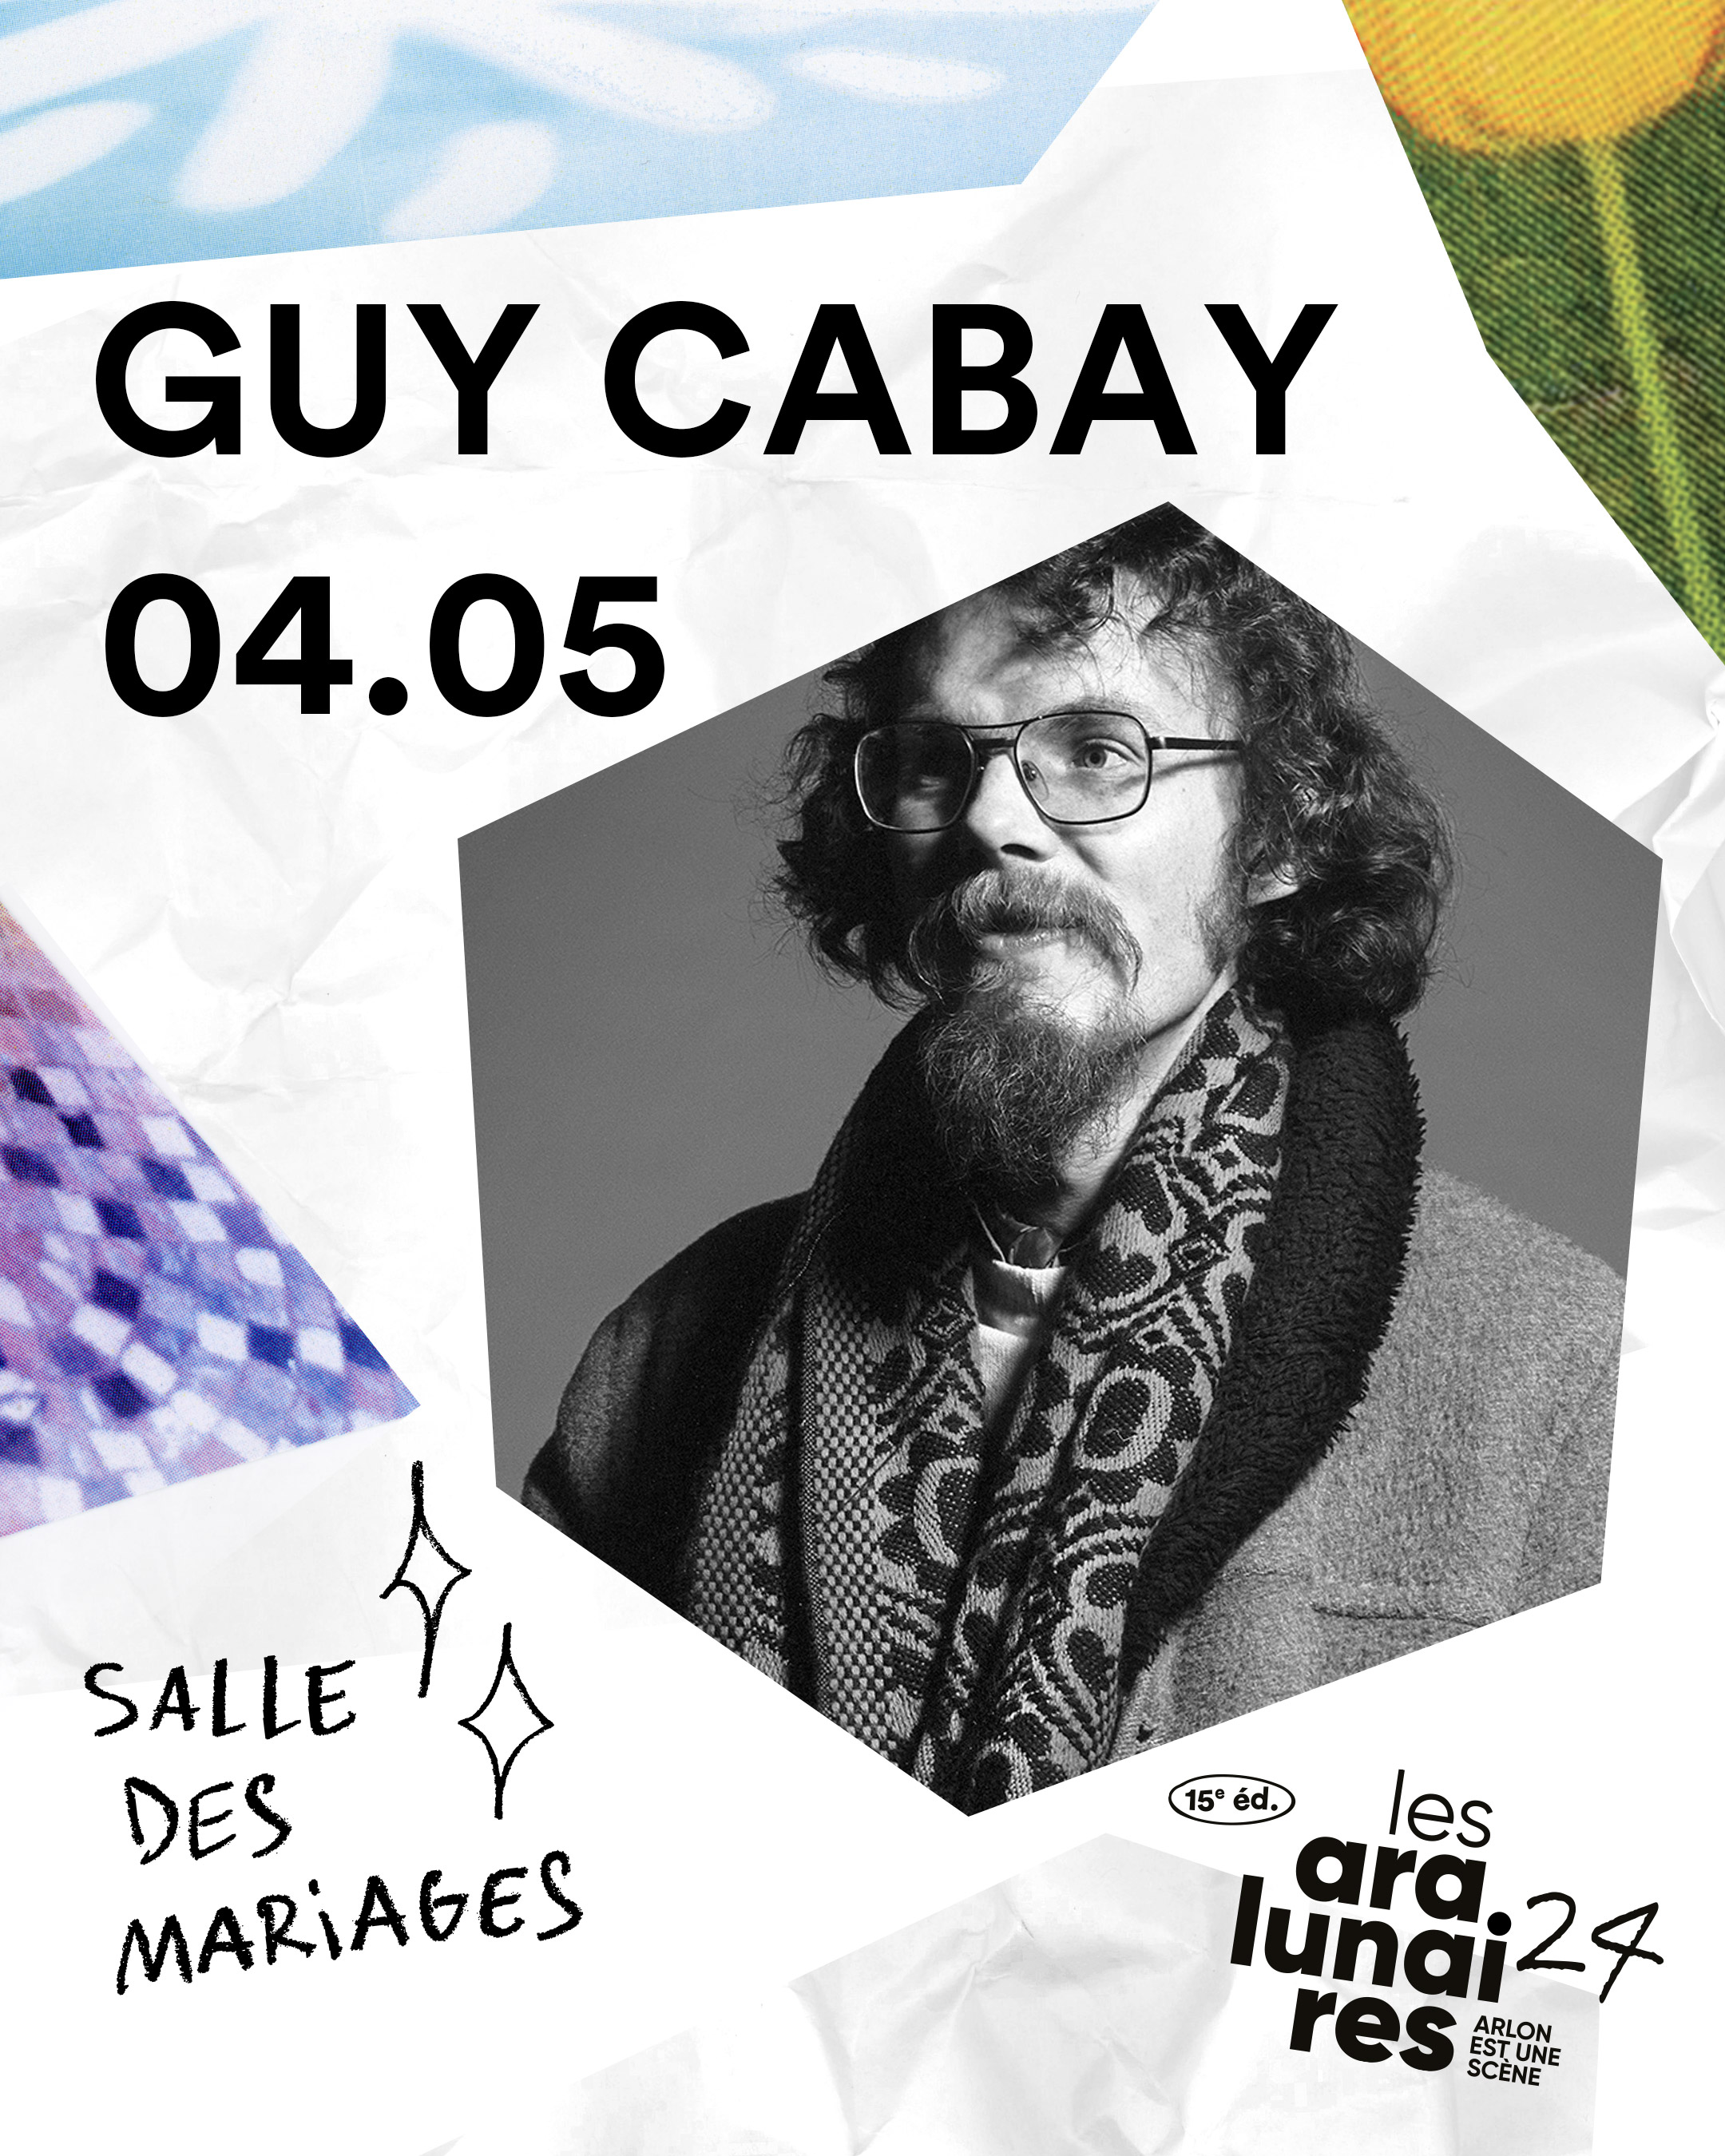 Guy Cabay - Les aralunaires